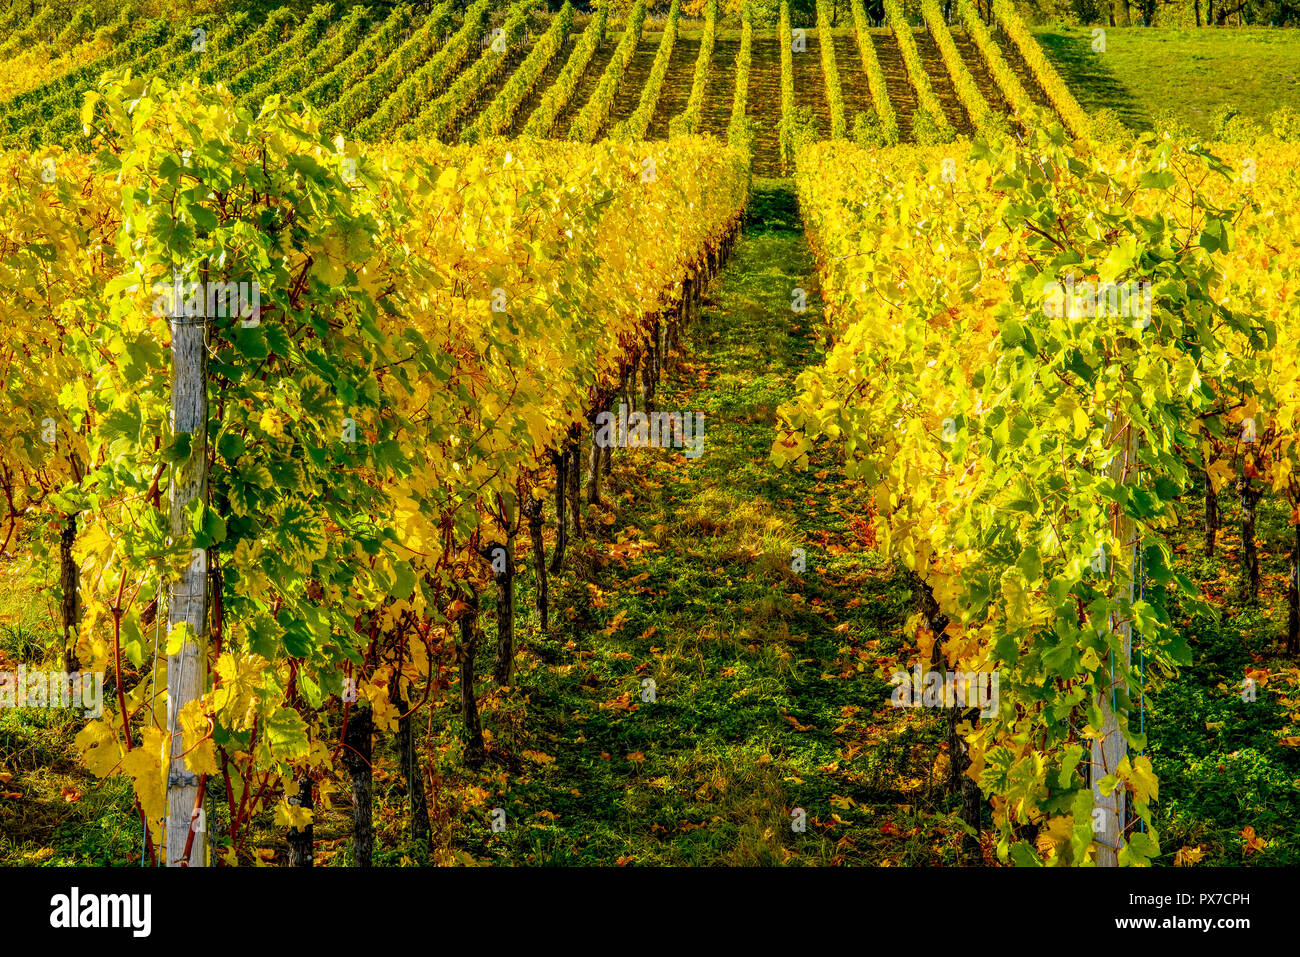 Vineyard in autumn colors. Switzerland. Stock Photo